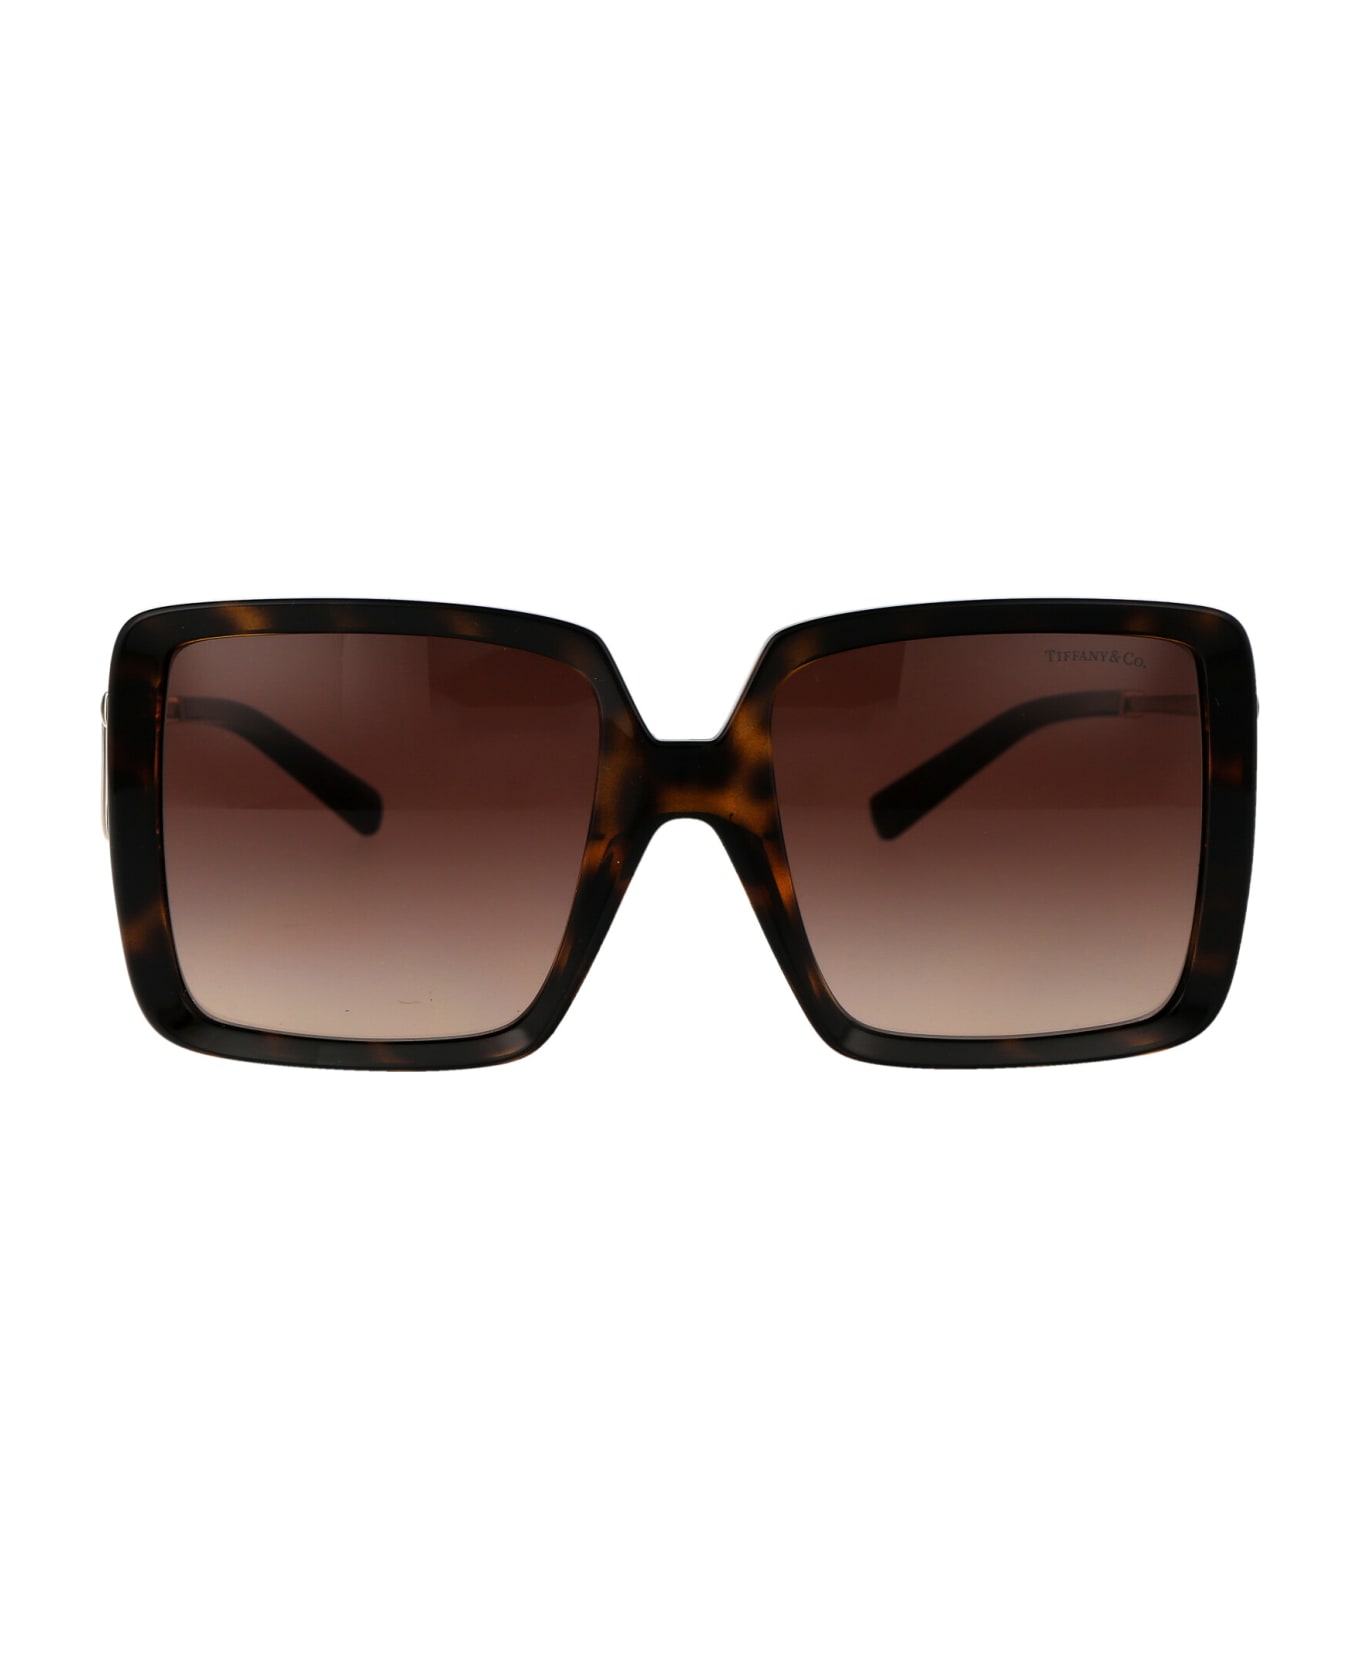 Tiffany & Co. 0tf4212u Sunglasses - 80153B Havana